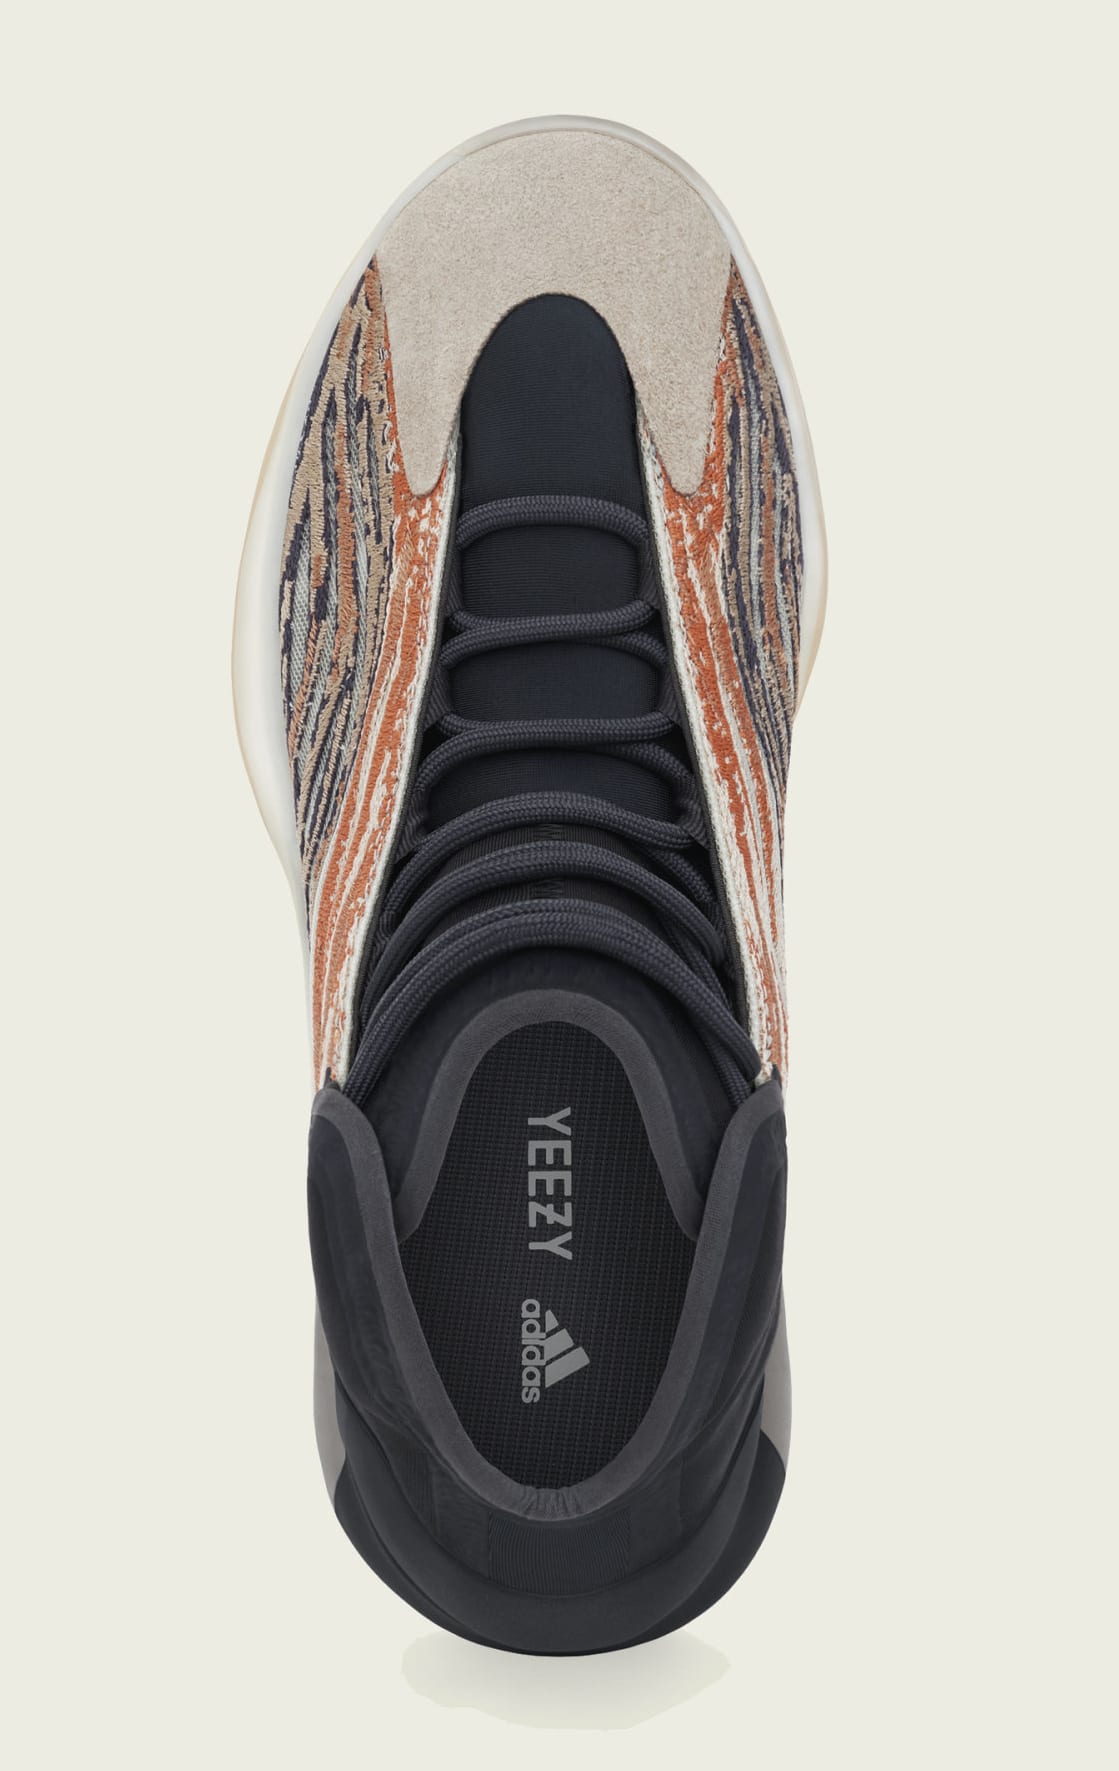 Adidas Yeezy Quantum 'Flash Orange' Release Date May 2021 GW5314 